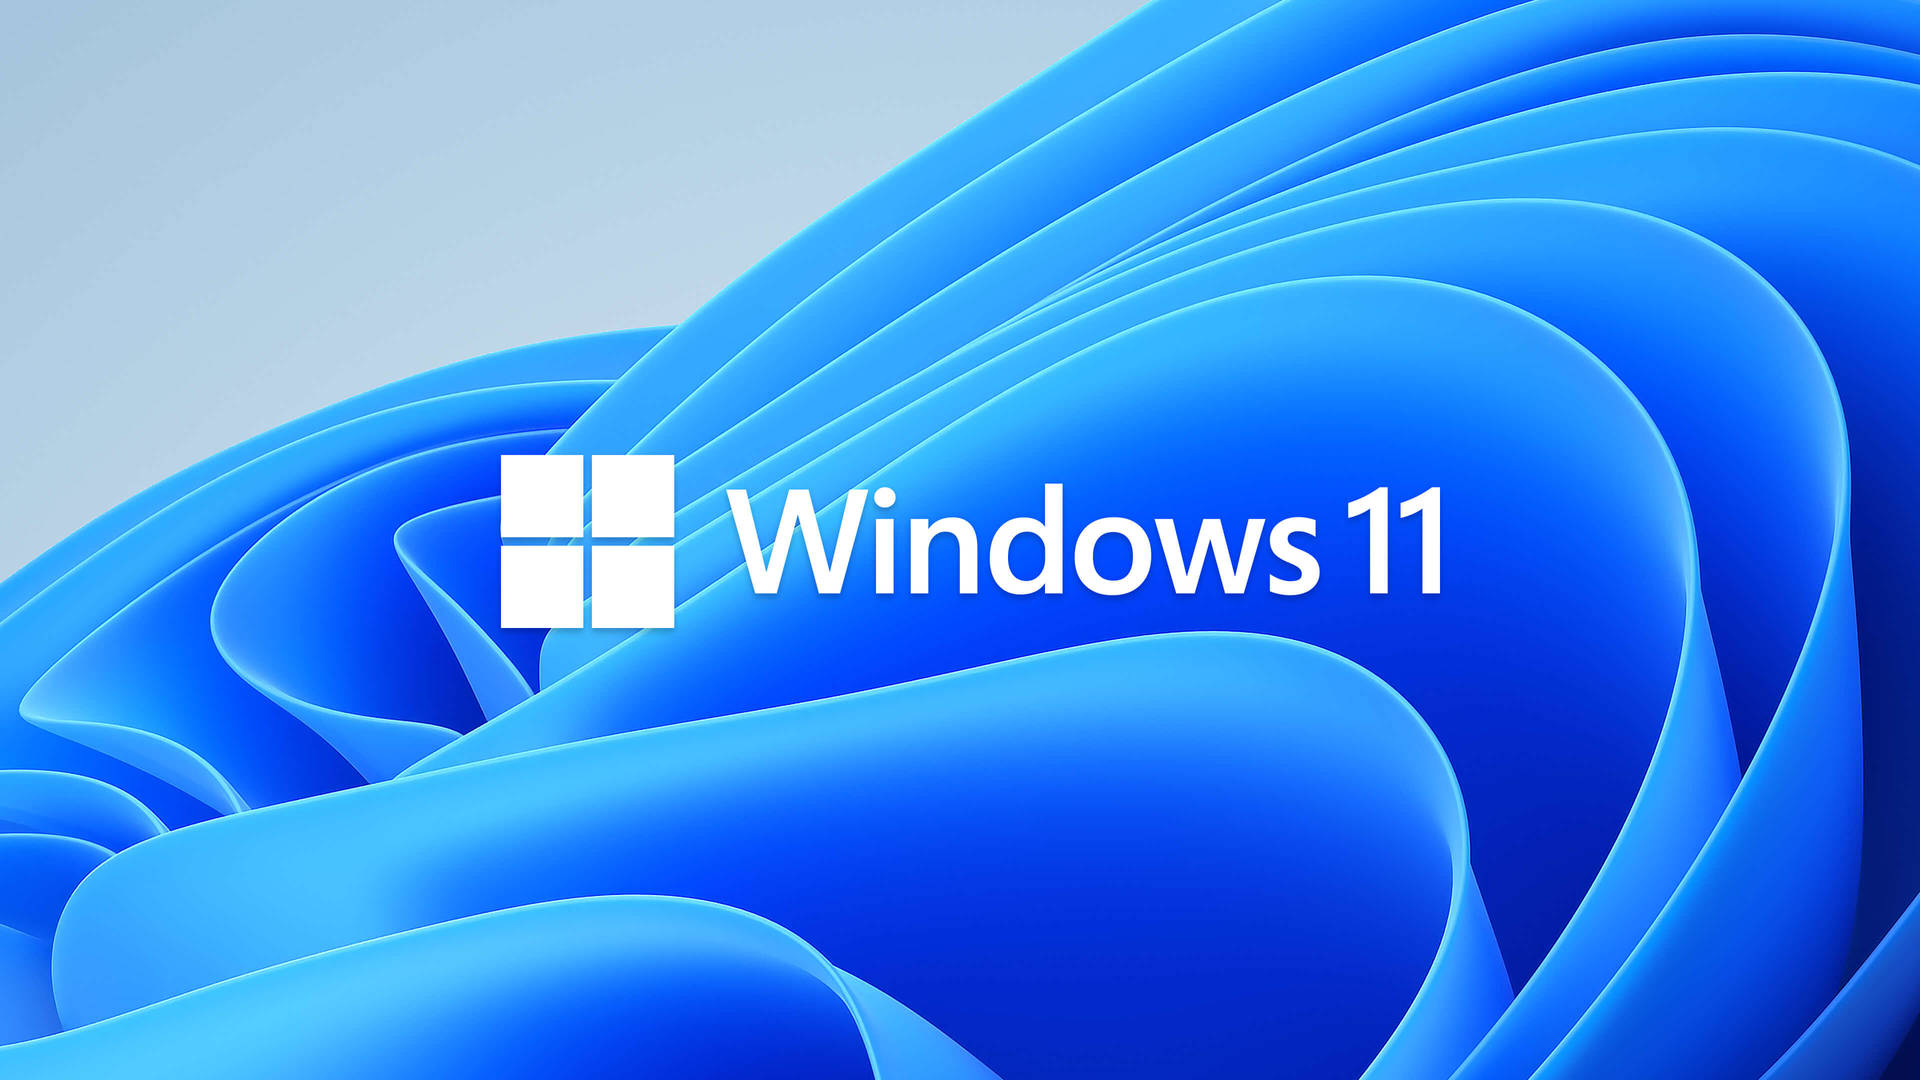 Free Windows 11 Wallpaper Downloads 200 Windows 11 Wallpapers for FREE   Wallpaperscom